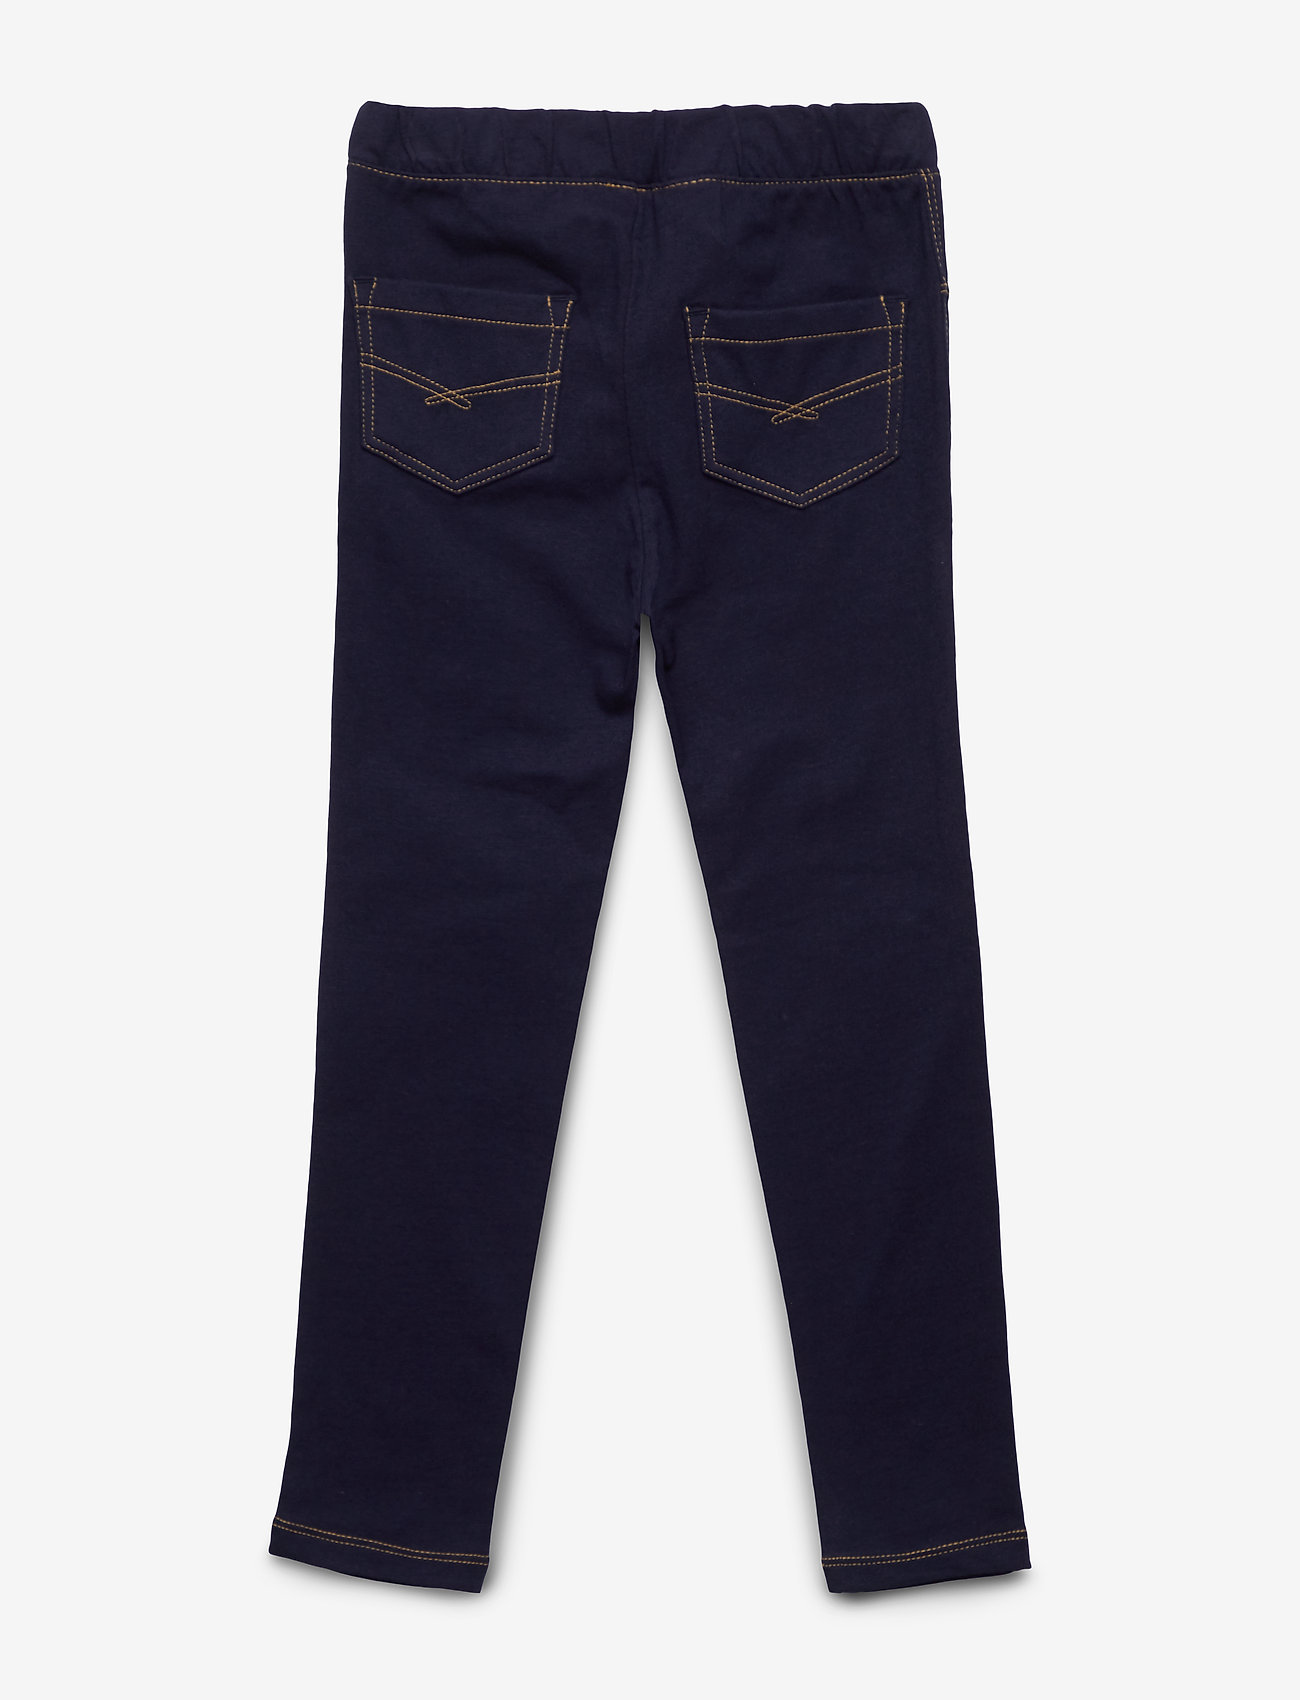 gap toddler jeans